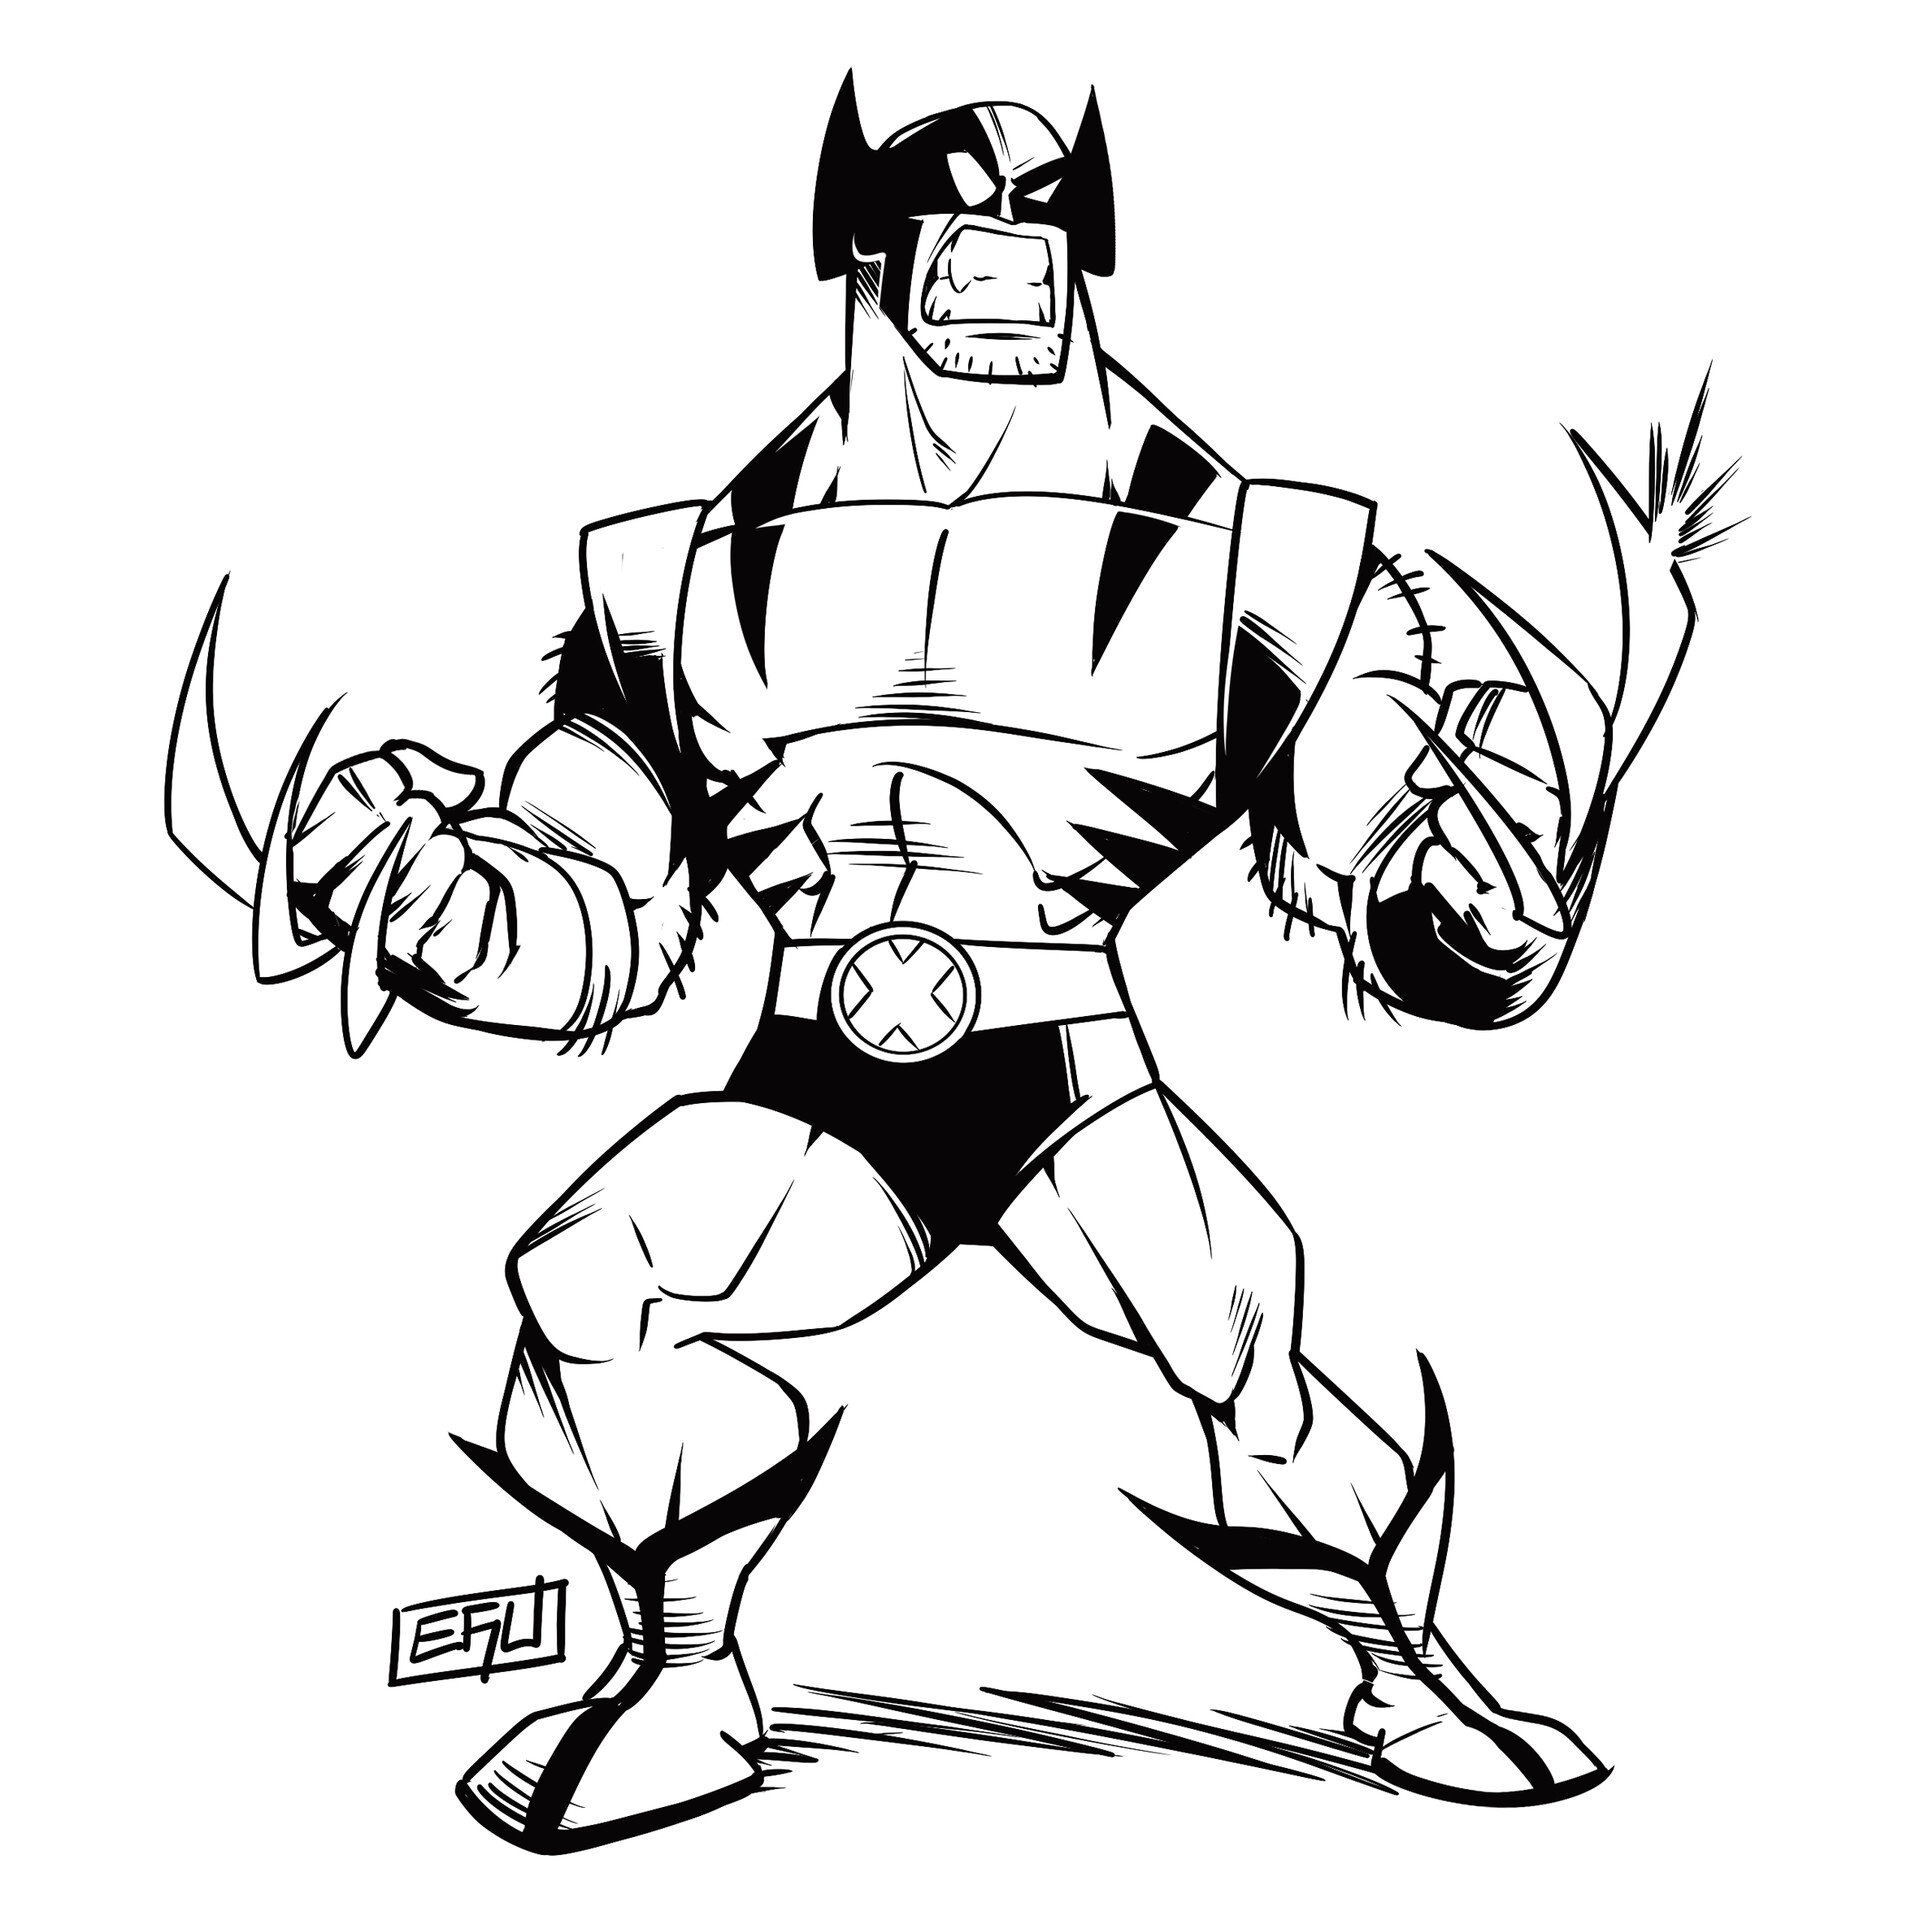 ArtStation - Wolverine cartoon